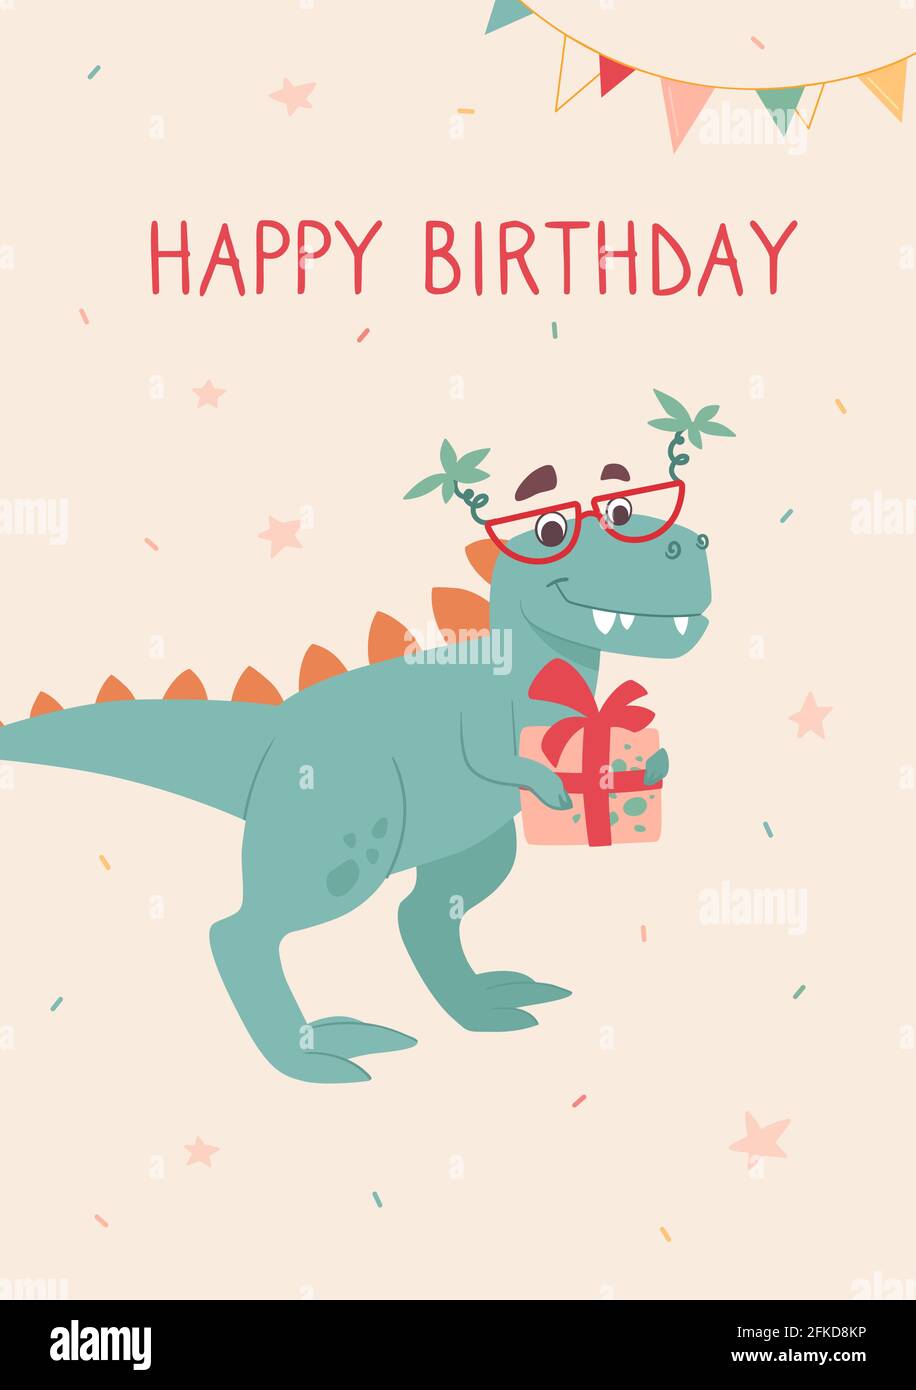 Badge dinosaure my little day : cadeau anniversaire dinosaure